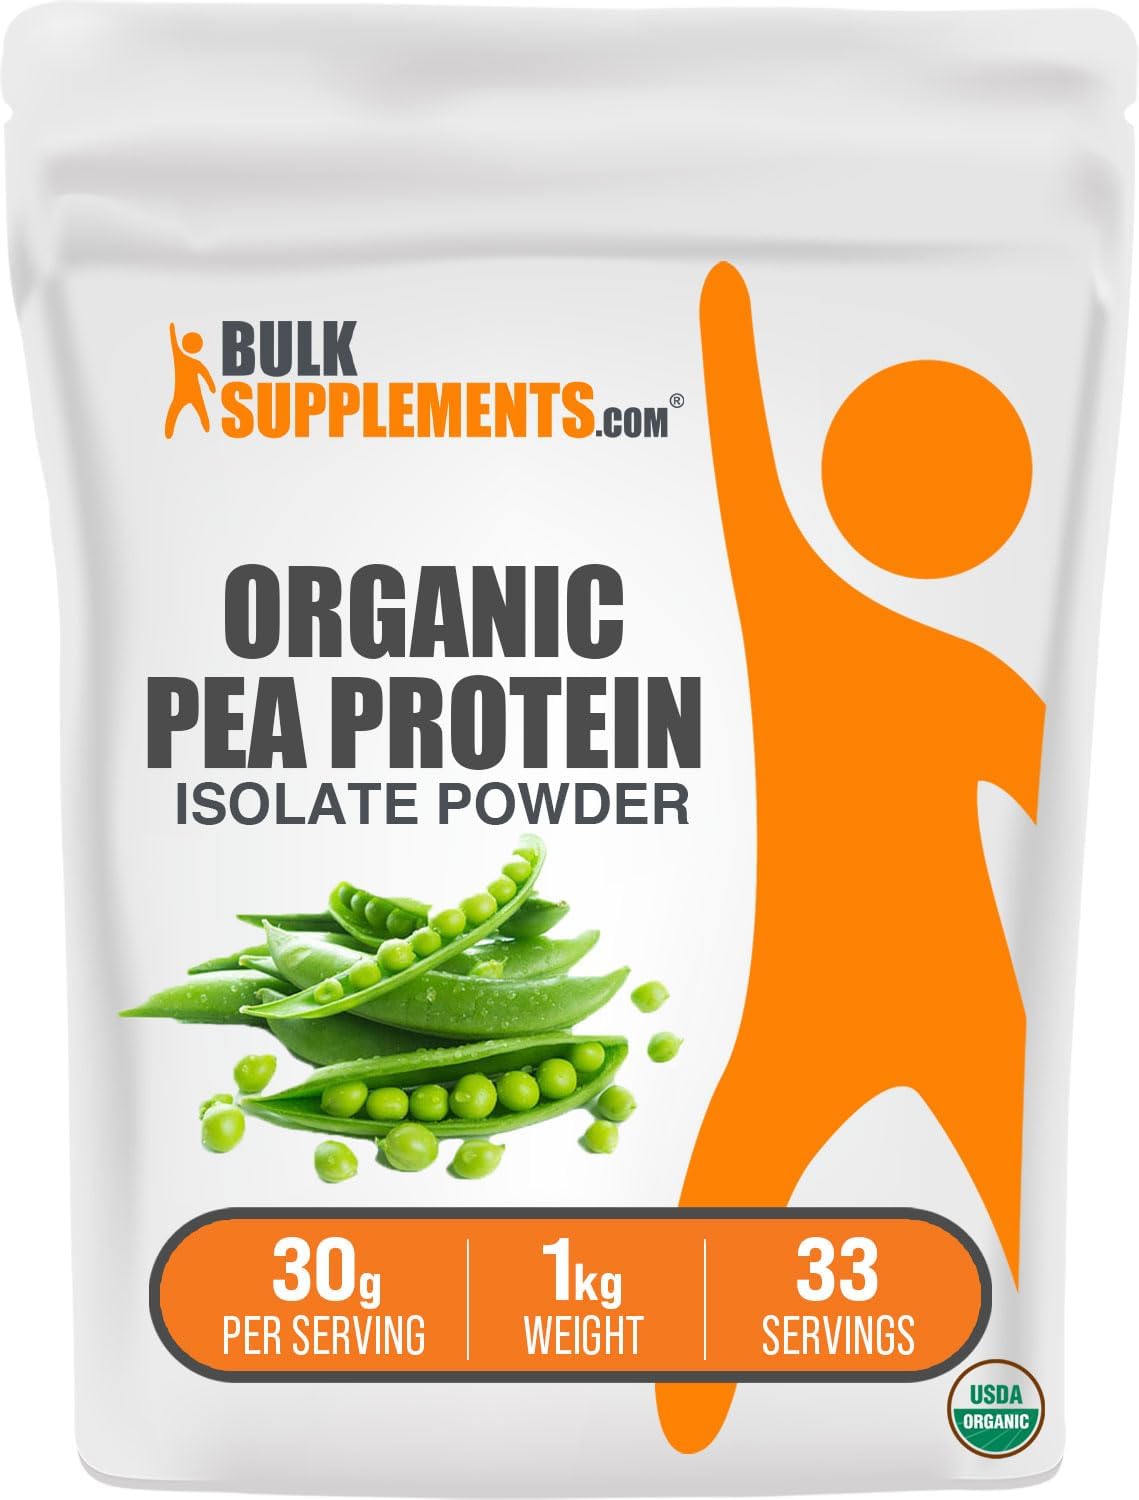 BULKSUPPLEMENTS.COM-Organic-Pea-Protein-Isolate-Powder-330